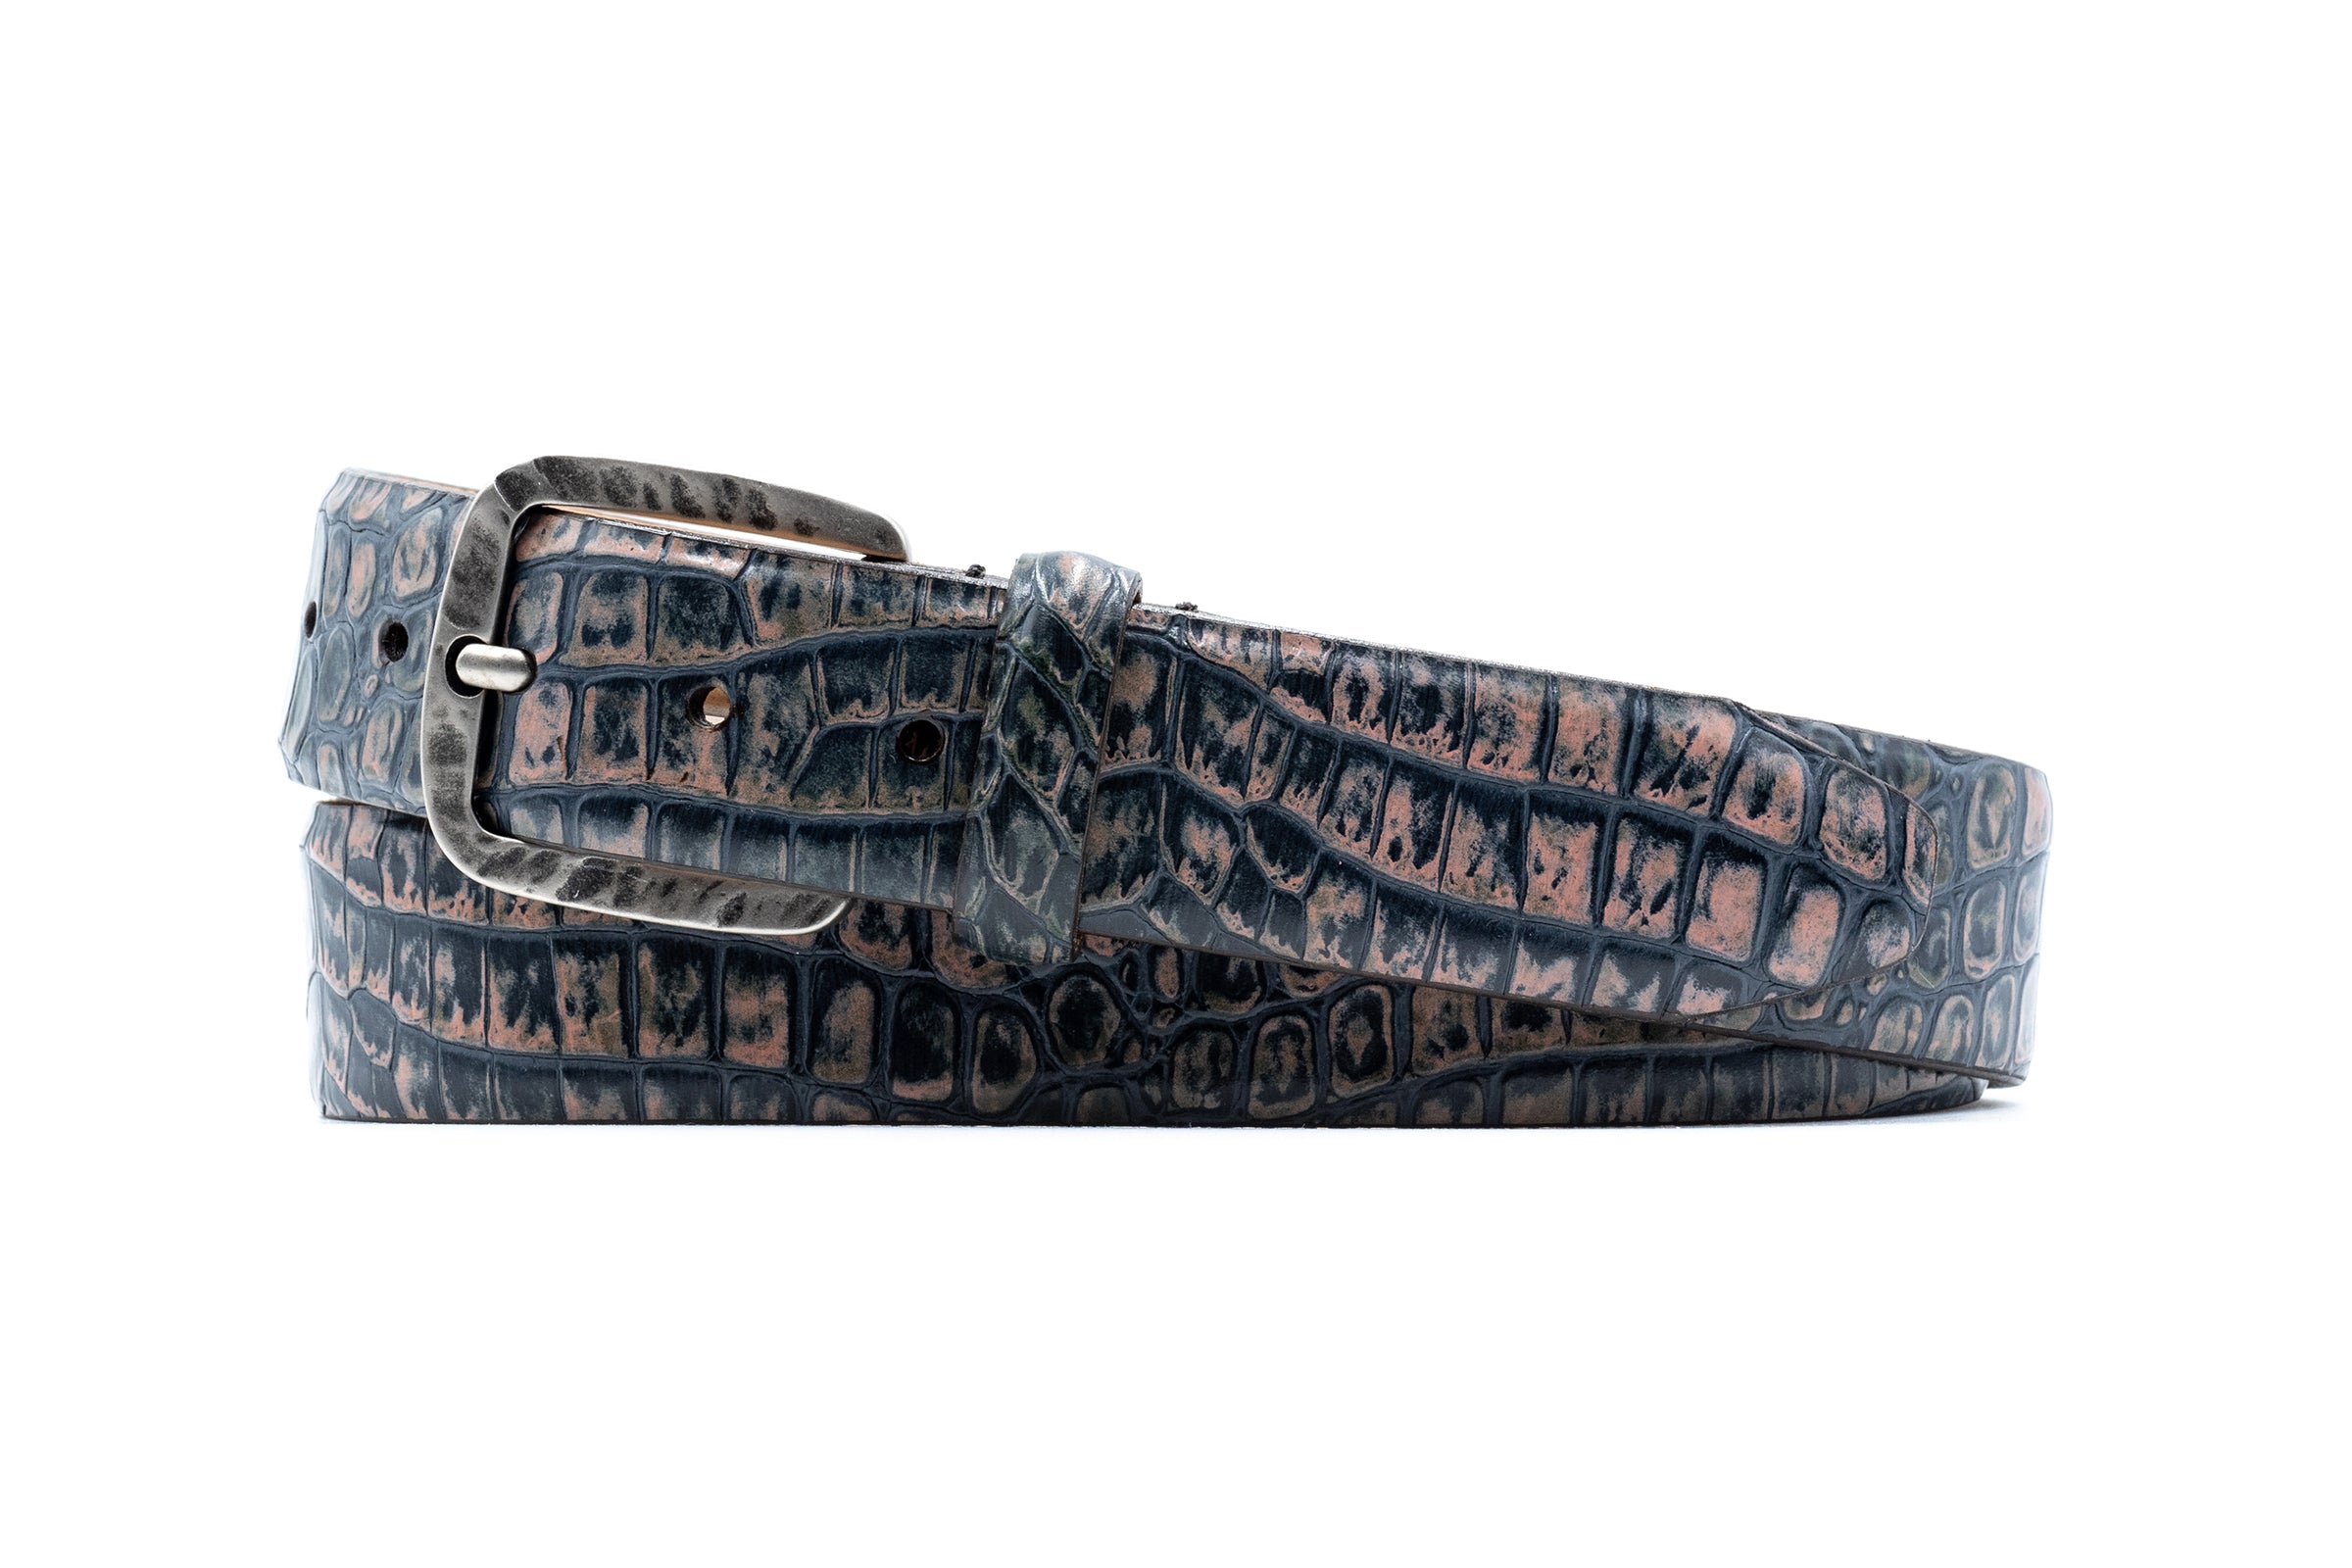 Tucson Alligator Grain Italian Calf Leather Belt - Midnight